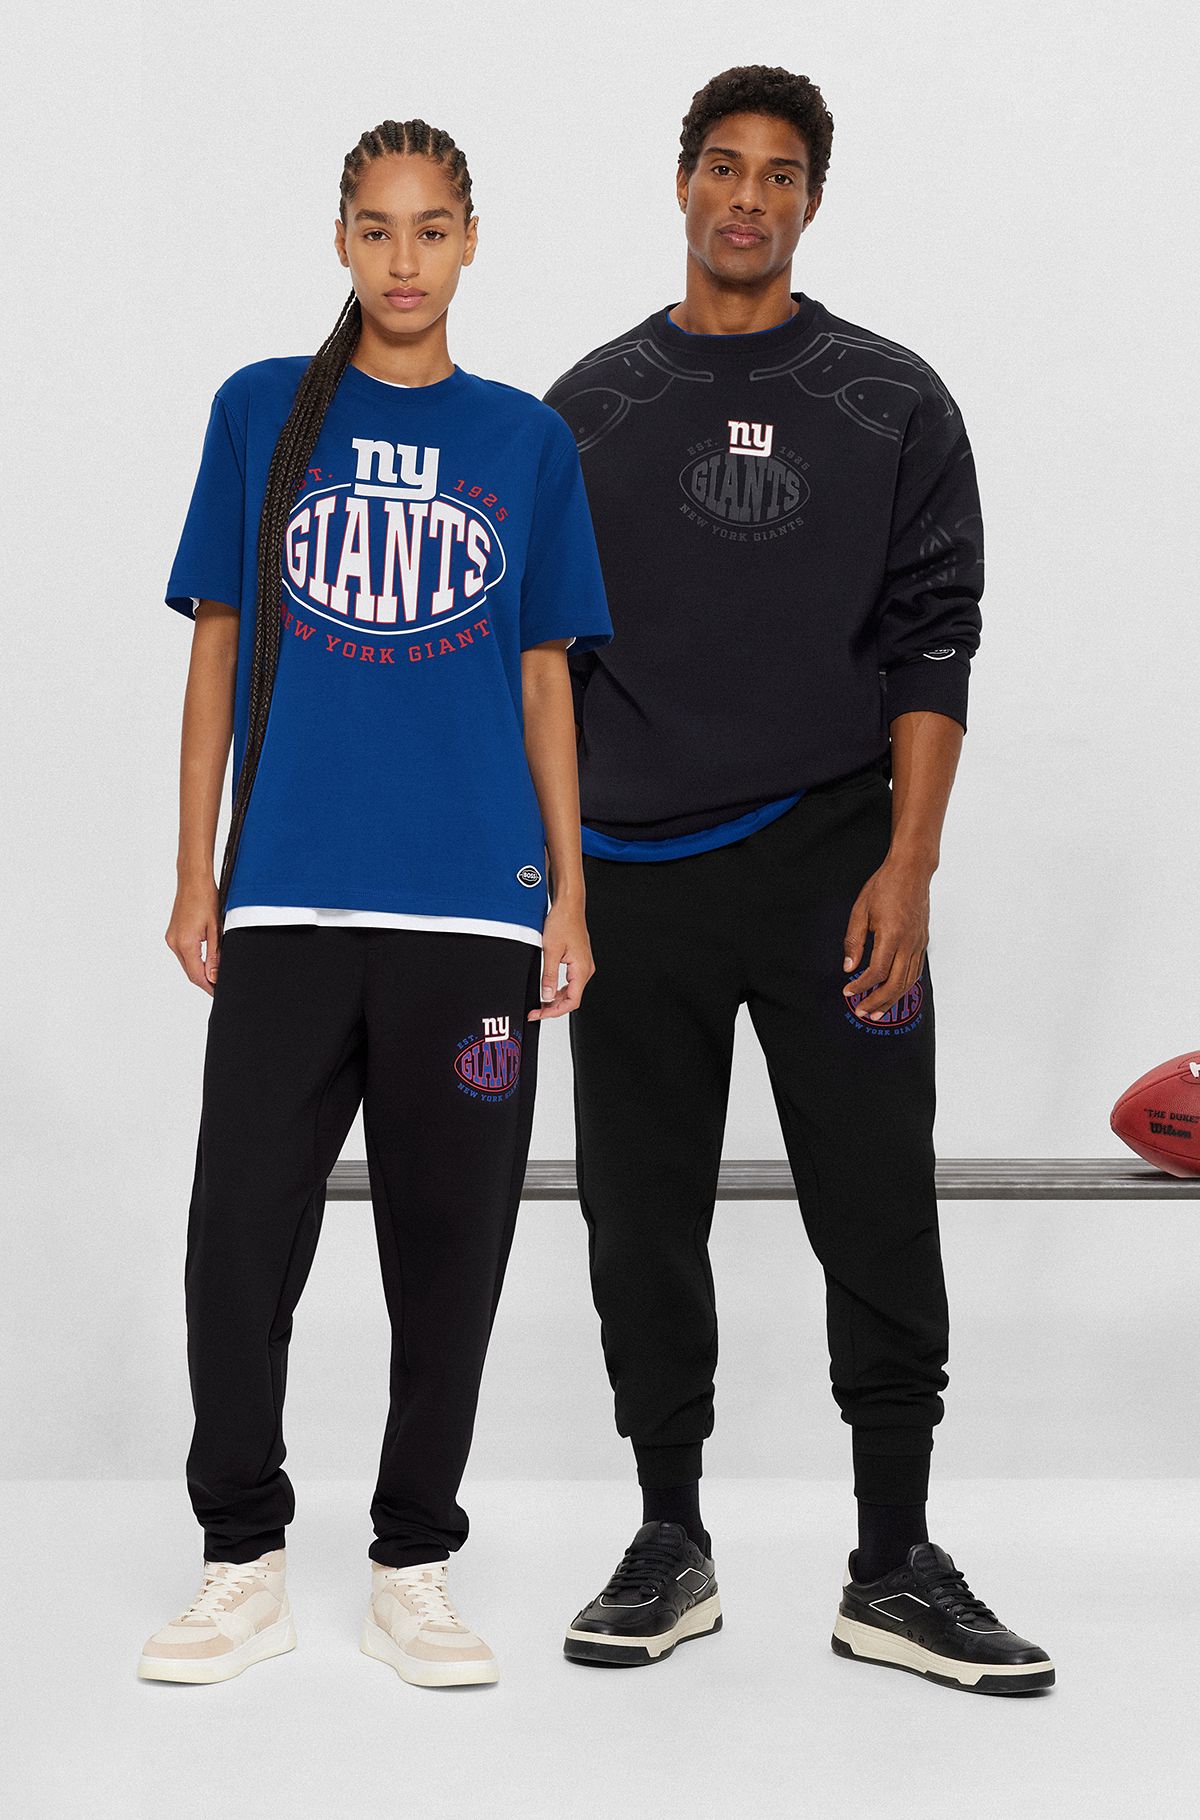 BOSS x NFL Jogginghose aus Baumwoll-Mix mit Brandings der Kooperation, Giants